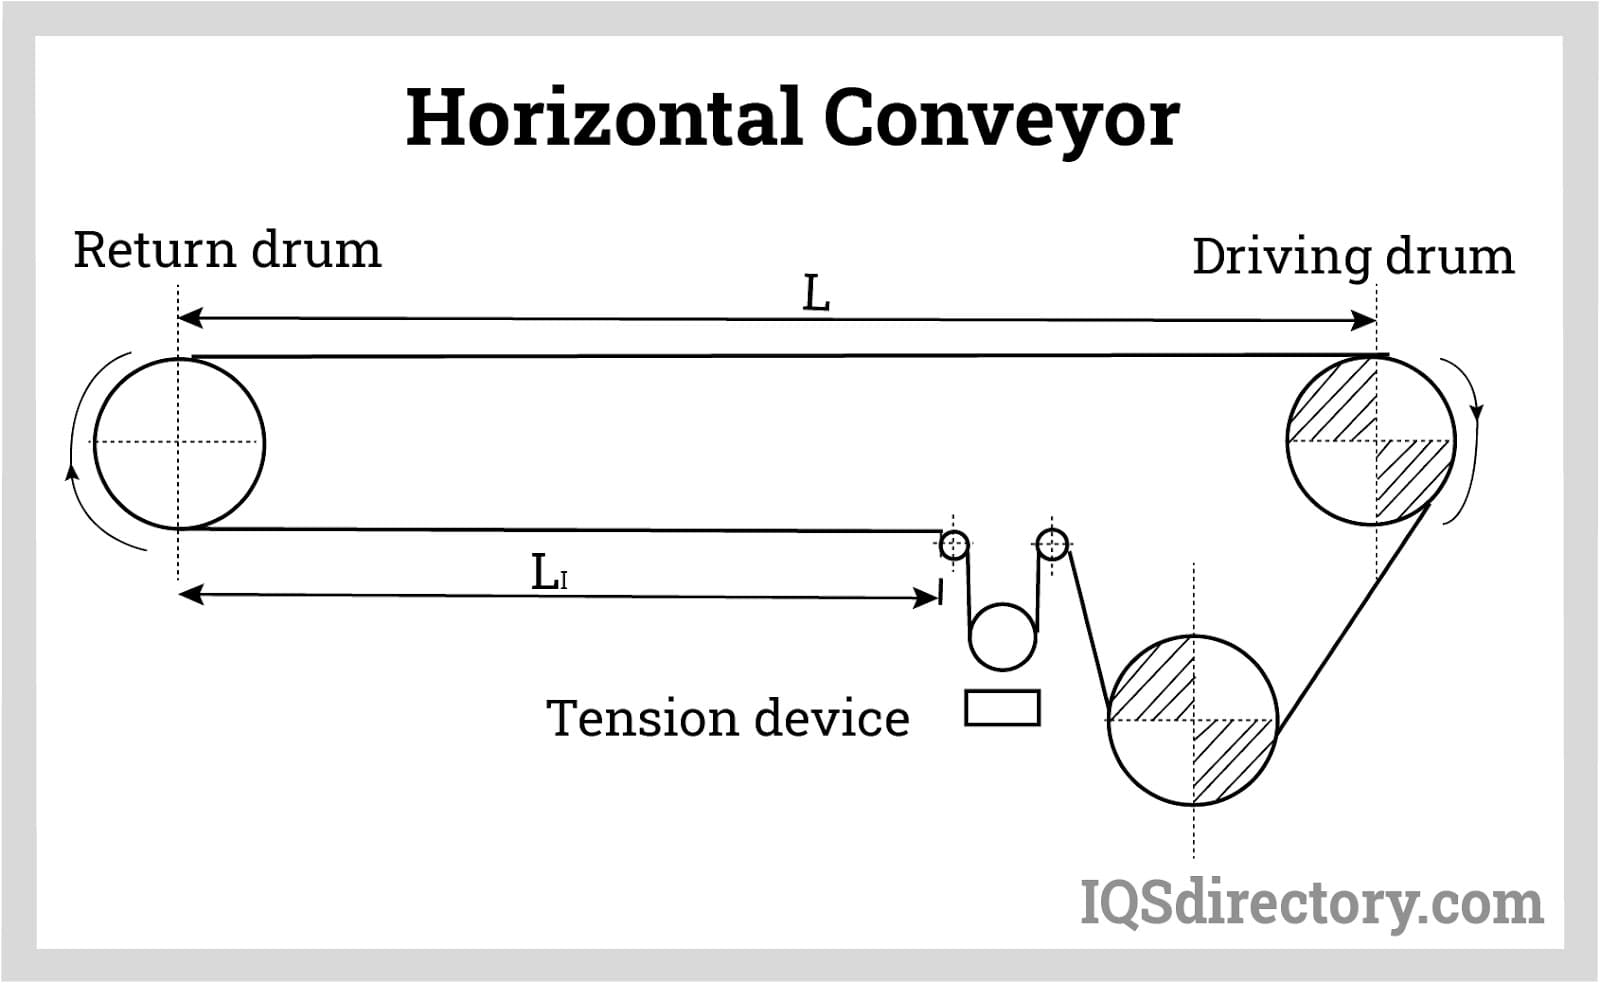 Horizontal Conveyor